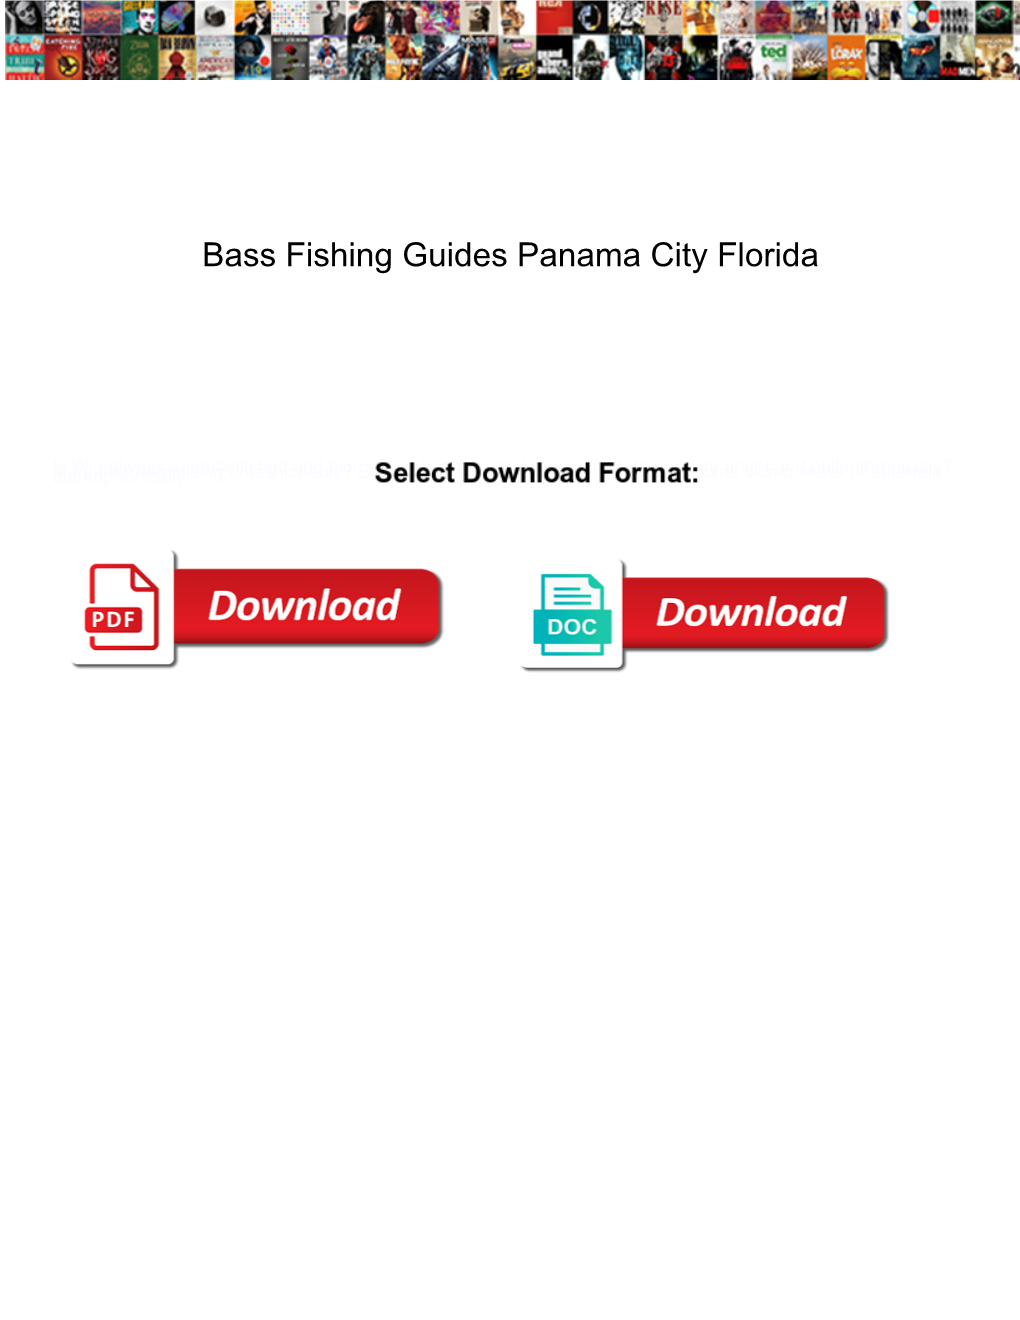 Bass Fishing Guides Panama City Florida